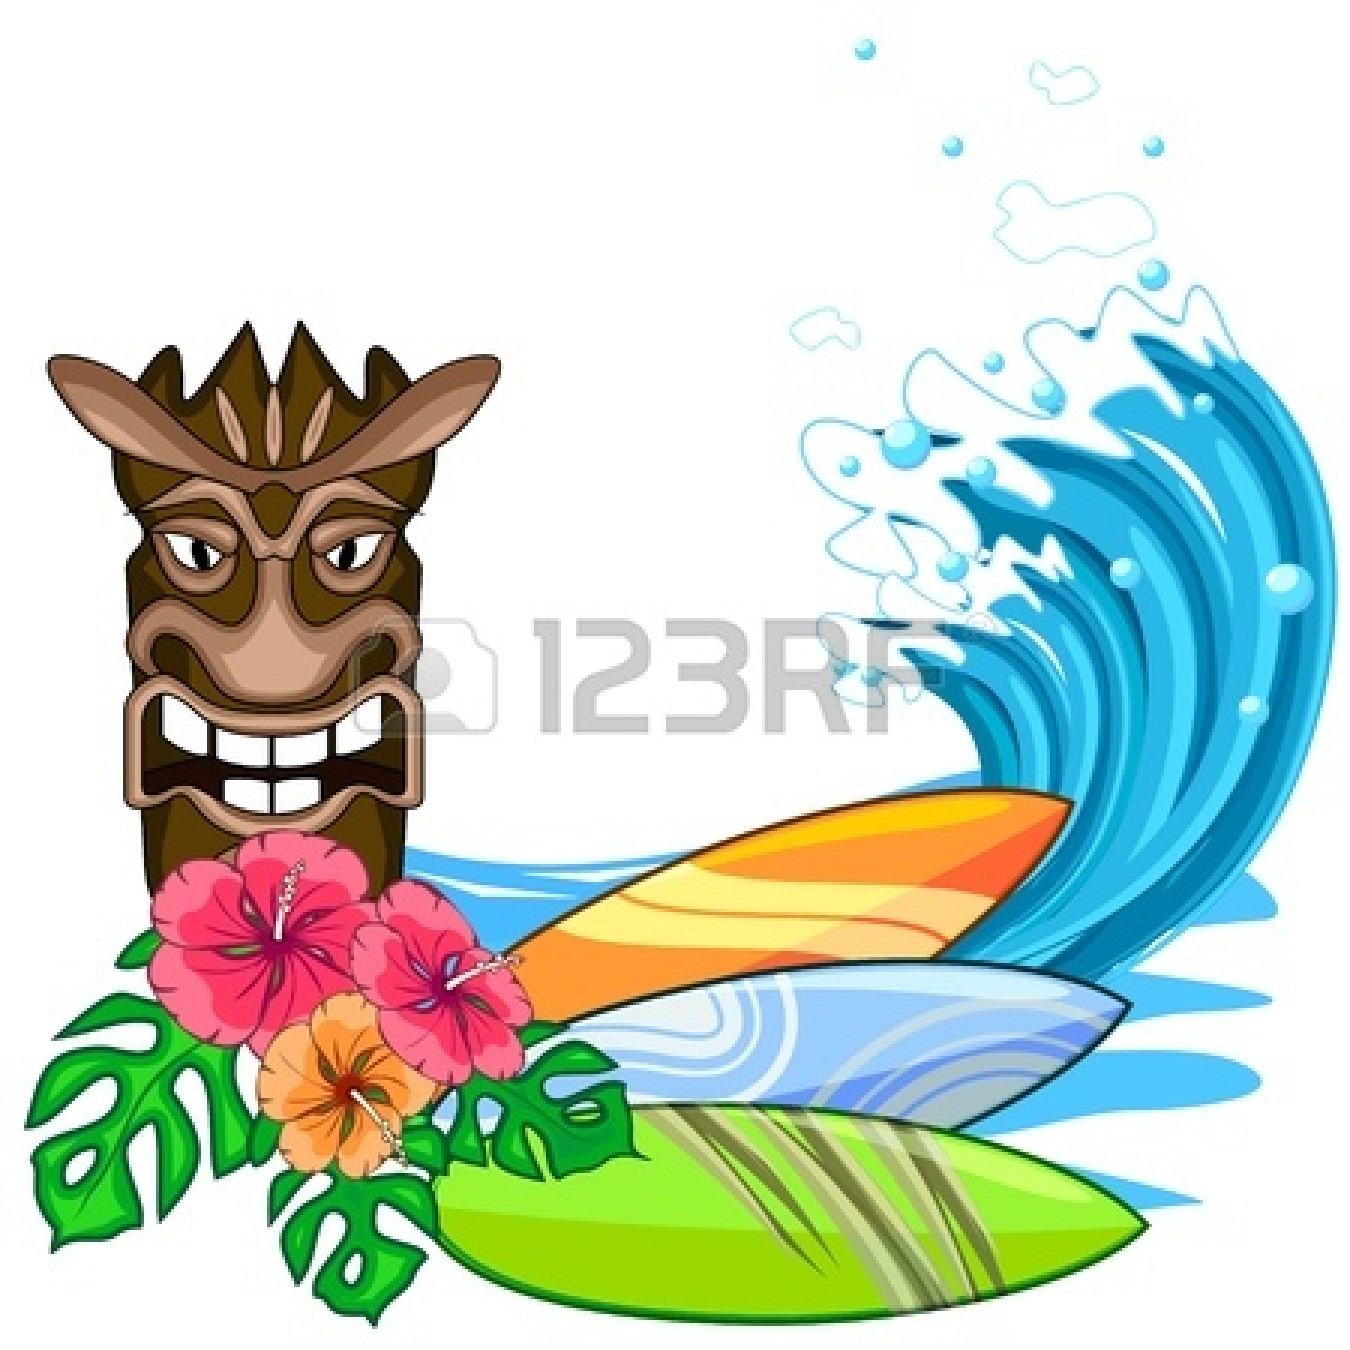 Hawaiian Tiki Clip Art   Clipart Panda   Free Clipart Images